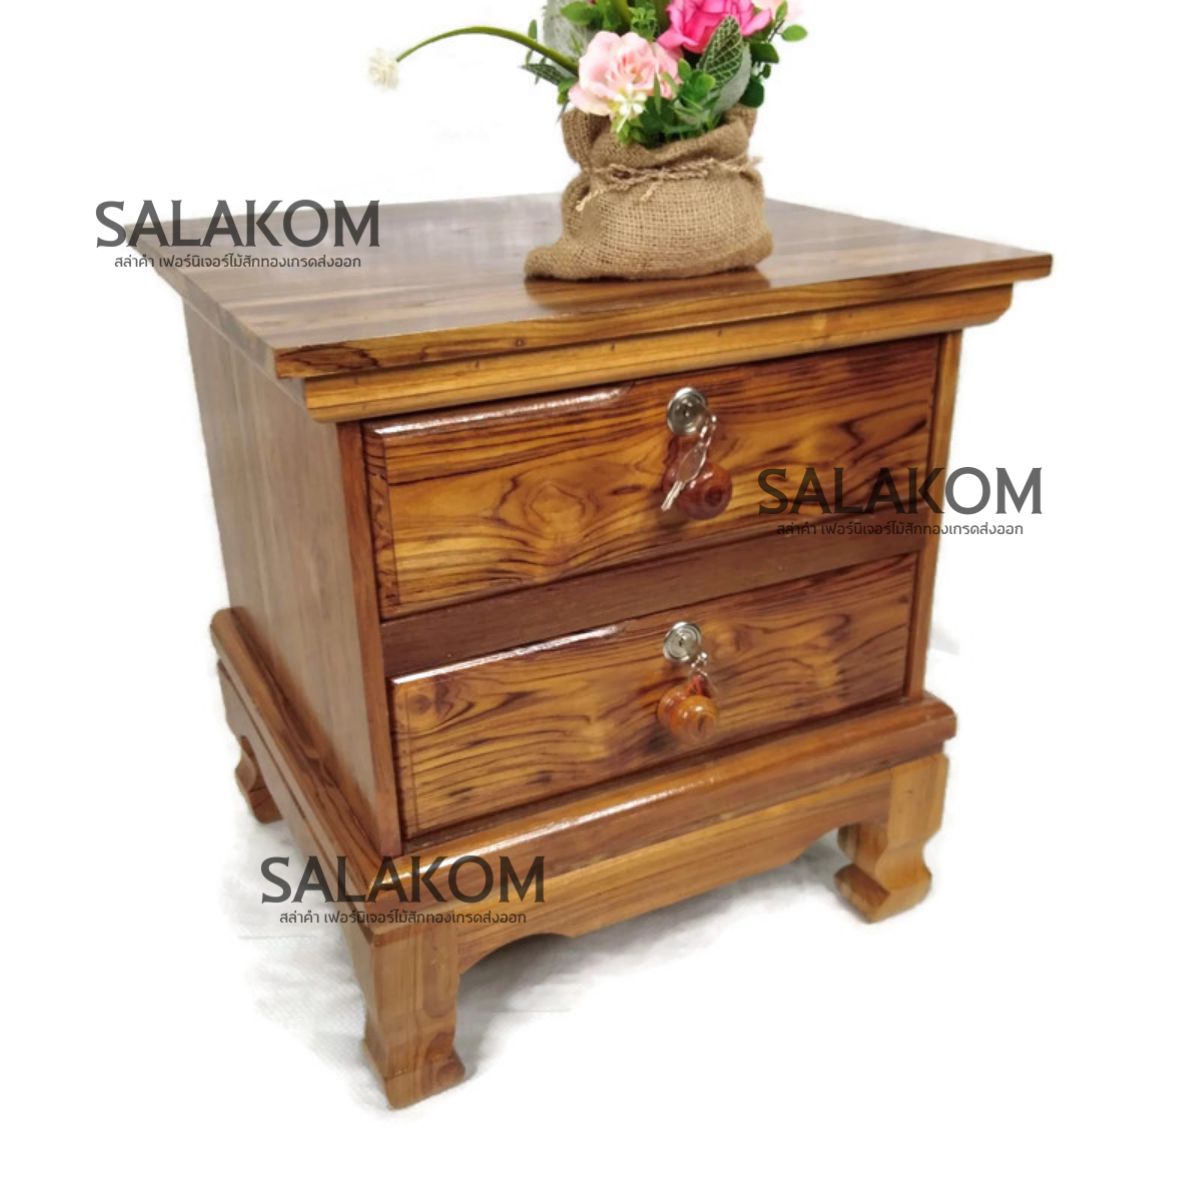 Salakom ตู้เก็บเอกสาร ตู้เก็บของ ตู้ข้างเตียงขาสิงห์ ไม้สัก แบบ 2 ชั้น สีเคลือบเนื้อไม้